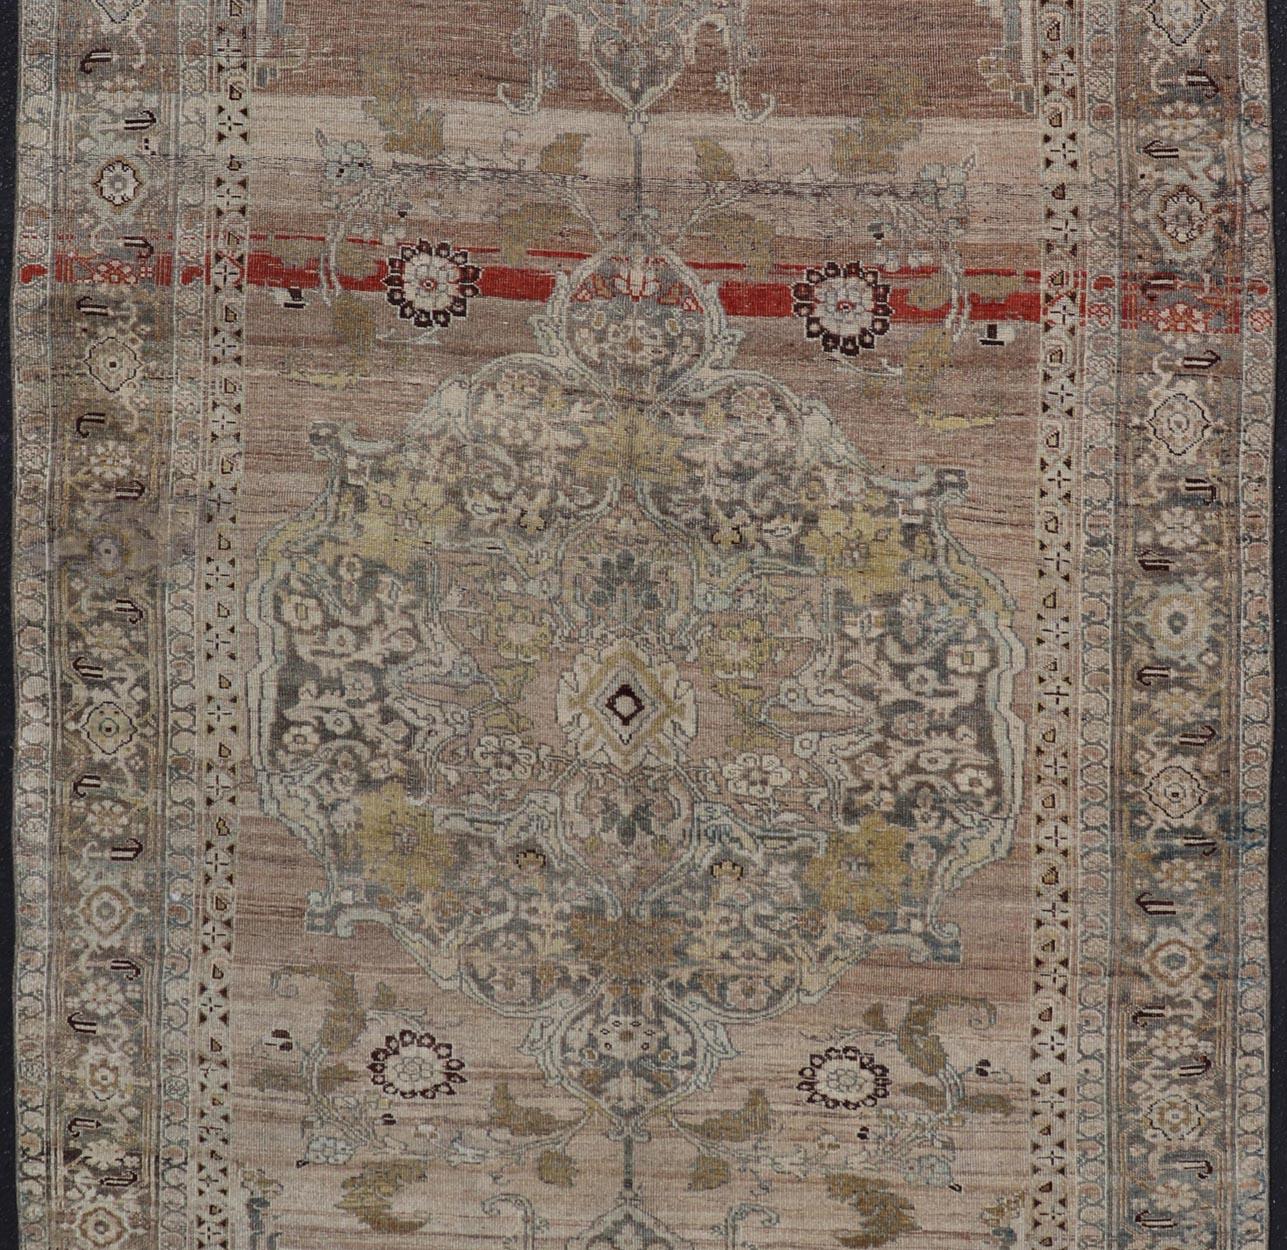 Wool  Antique Persian Bidjar Rug with Large Floral Medallion and Vining Floral